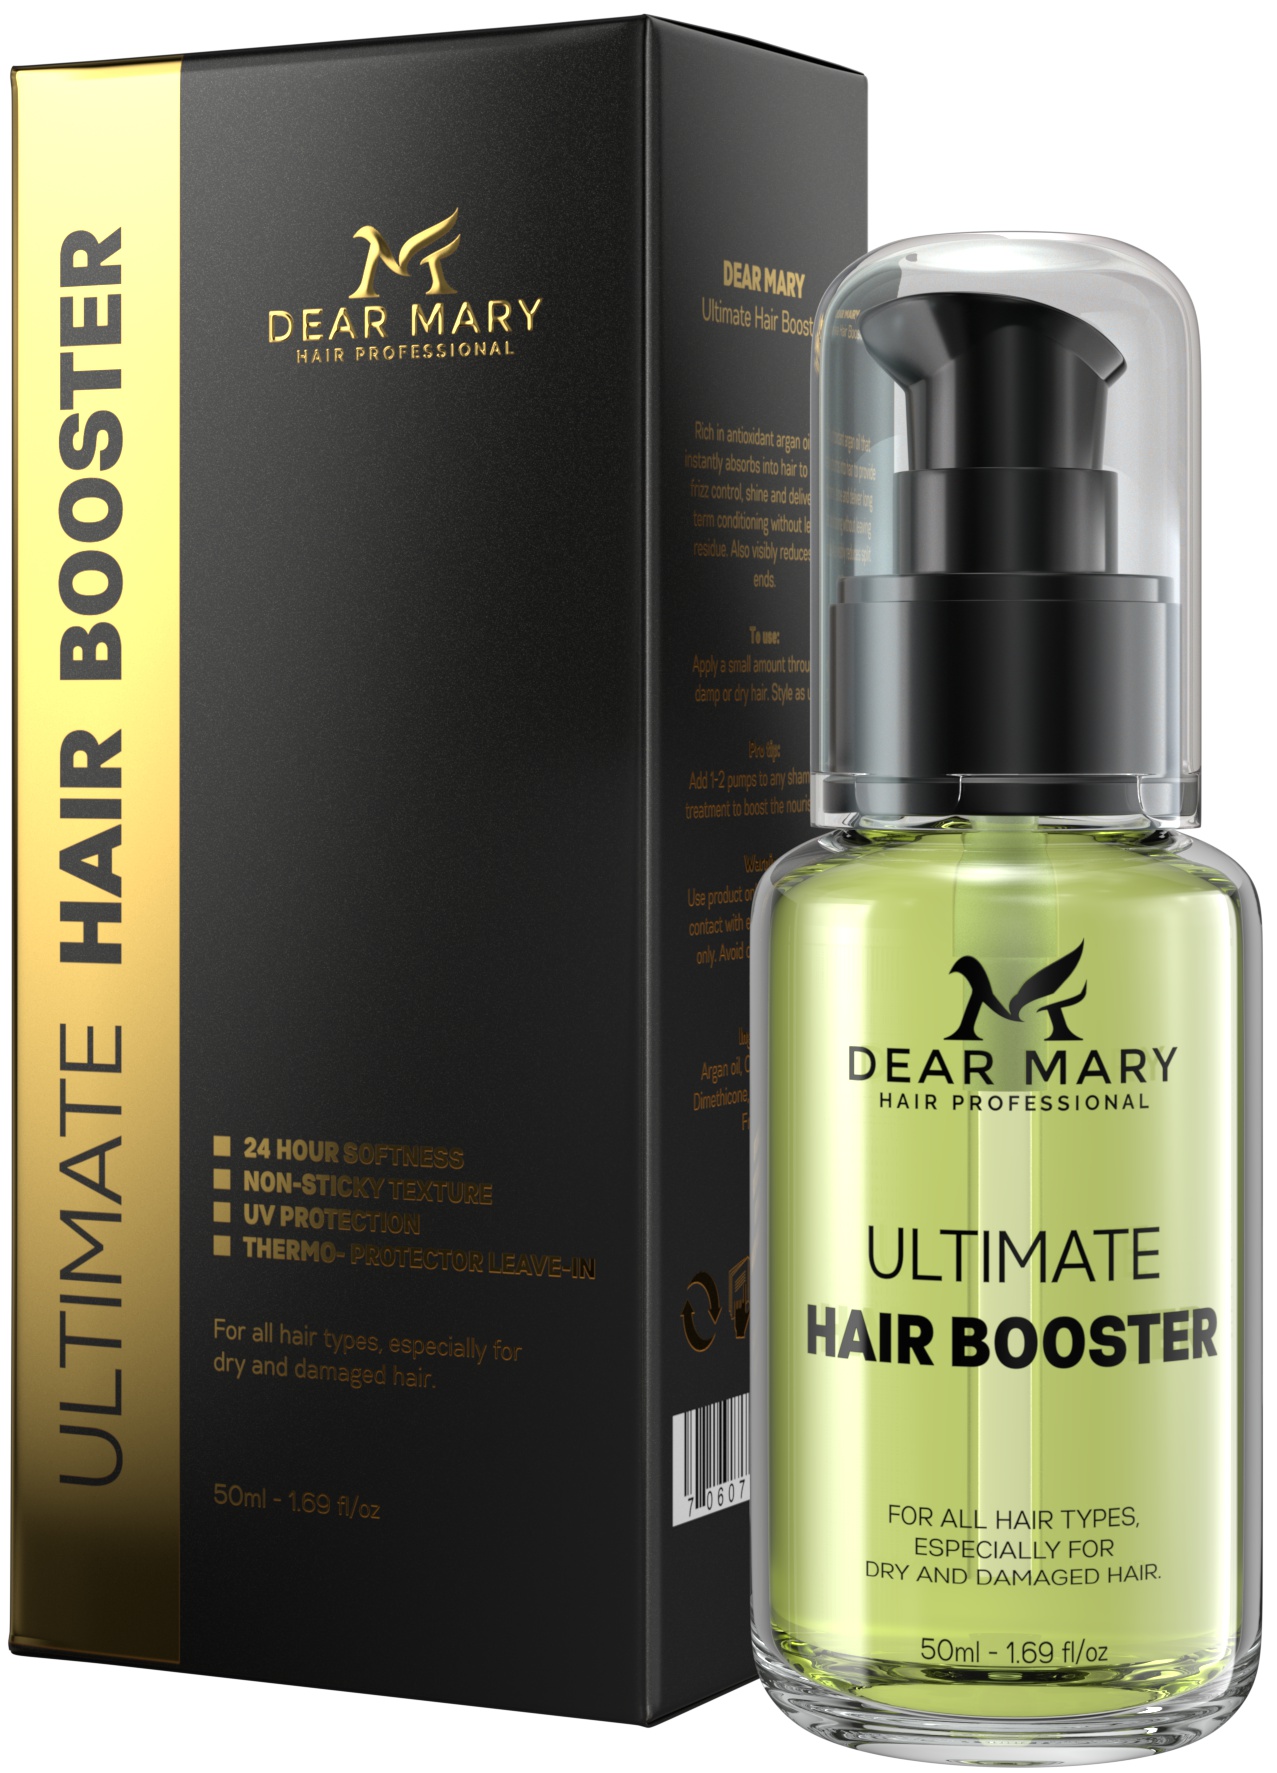 Dear Mary Ultimate Hair Booster